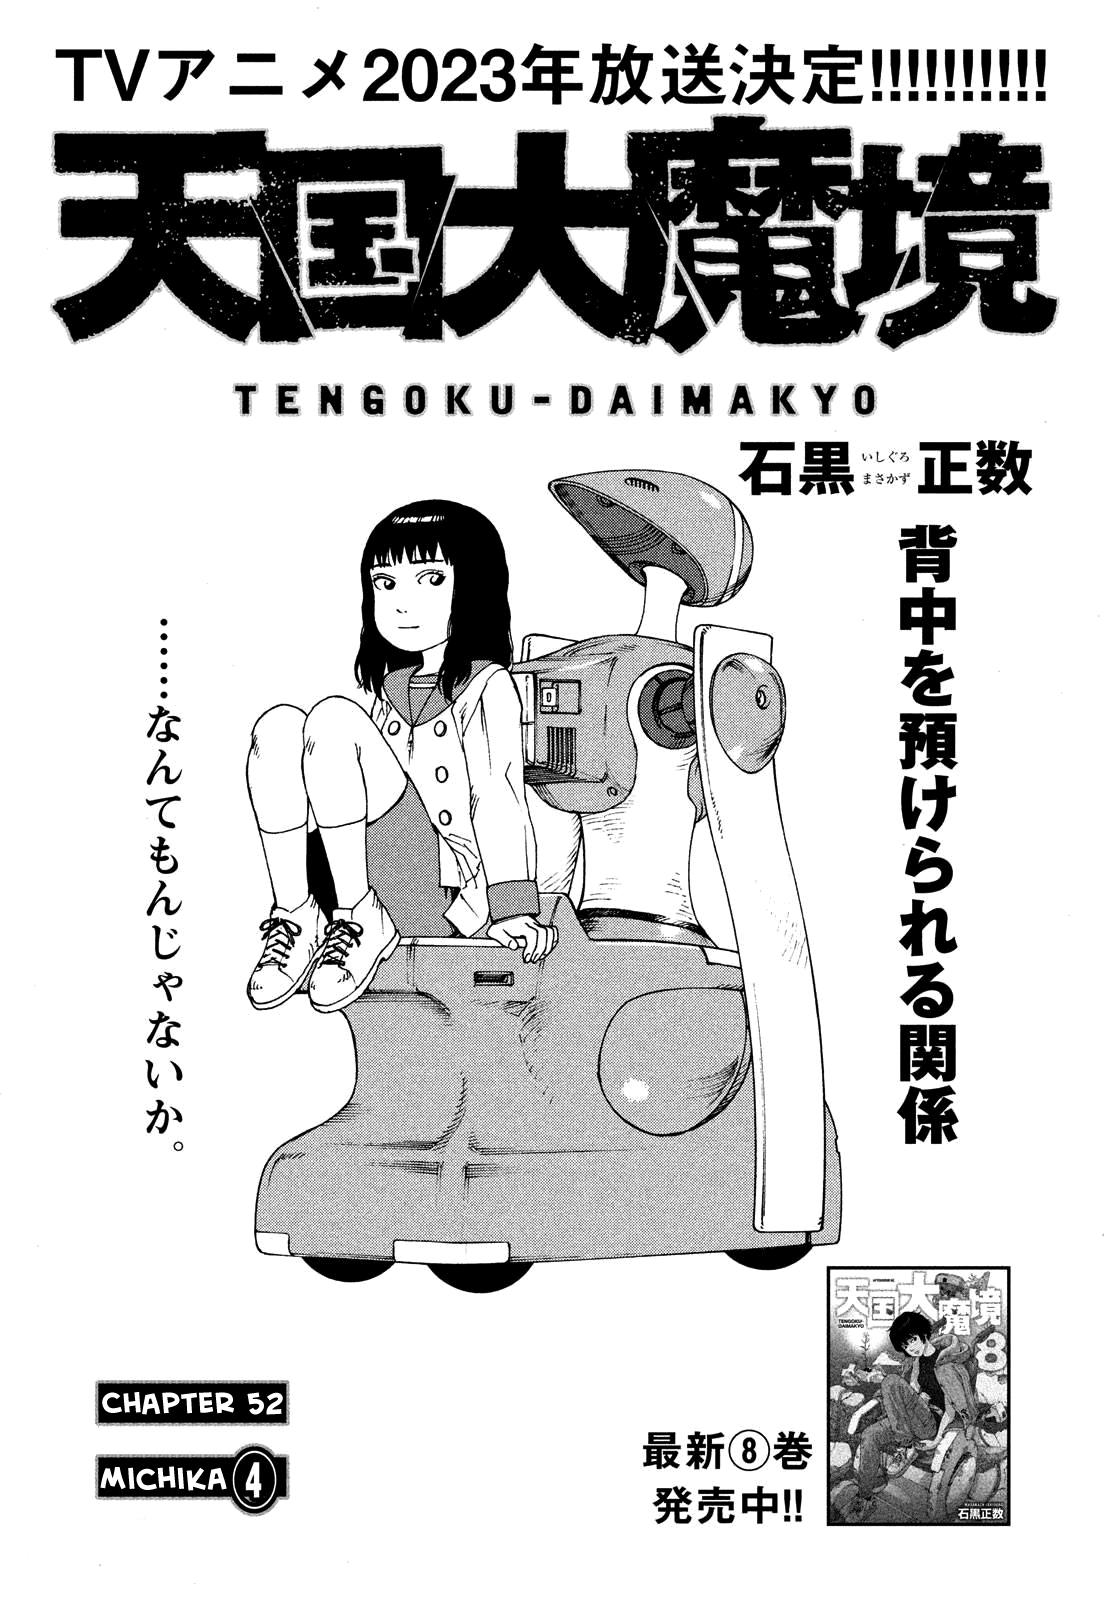 Tengoku Daimakyou - 02 - 44 - Lost in Anime